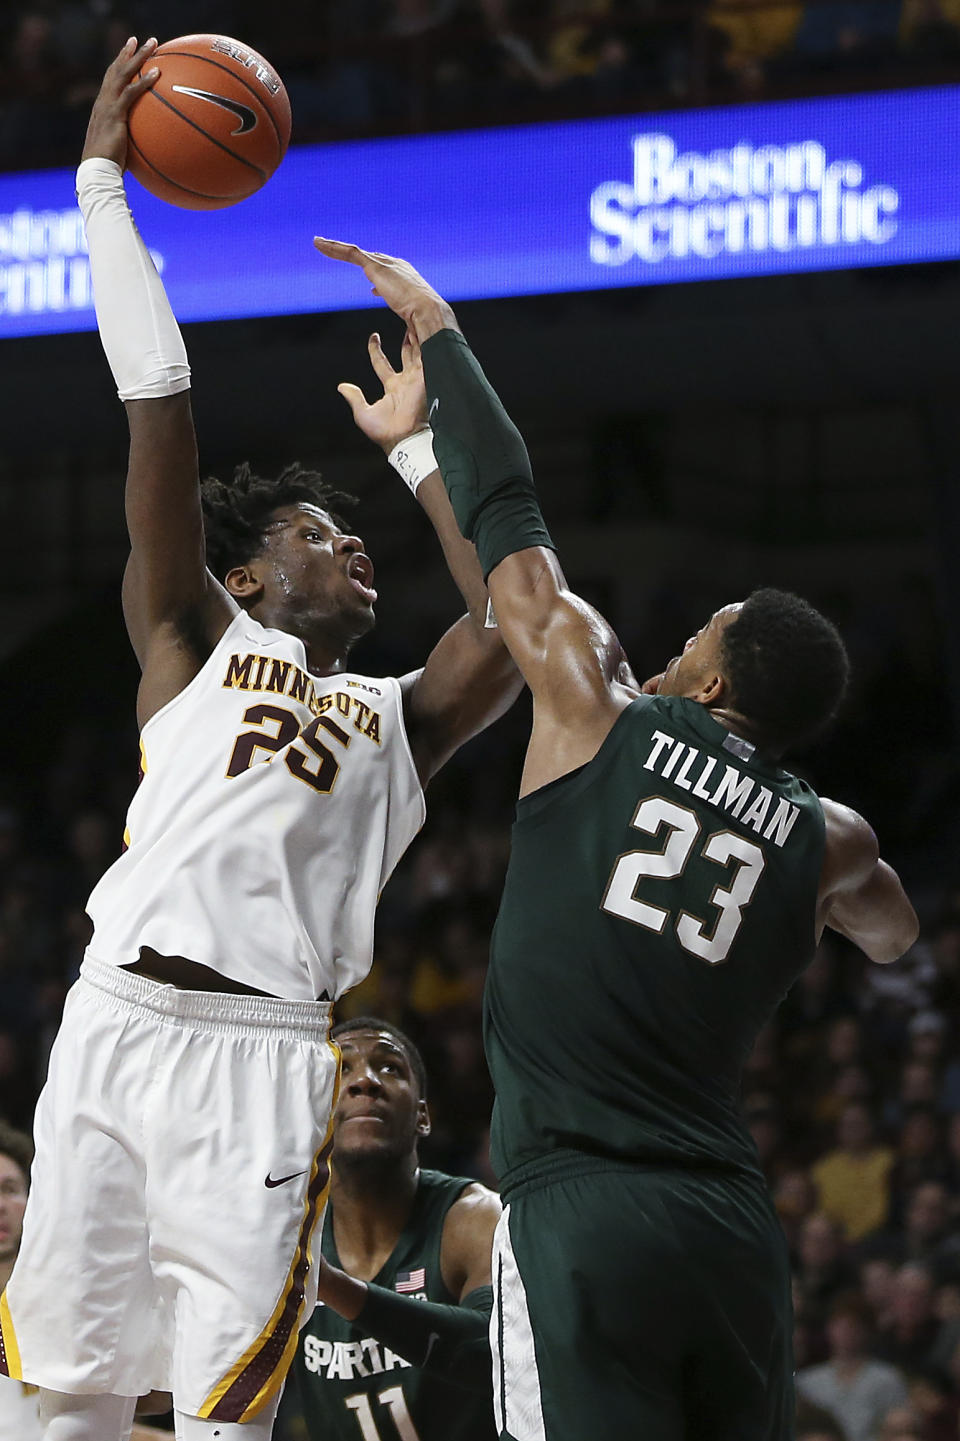 Minnesota's Daniel Oturu, left, shoots over Michigan State's Xavier Tillman during an NCAA college basketball game Sunday, Jan. 26, 2020, in Minneapolis. (AP Photo/Stacy Bengs)